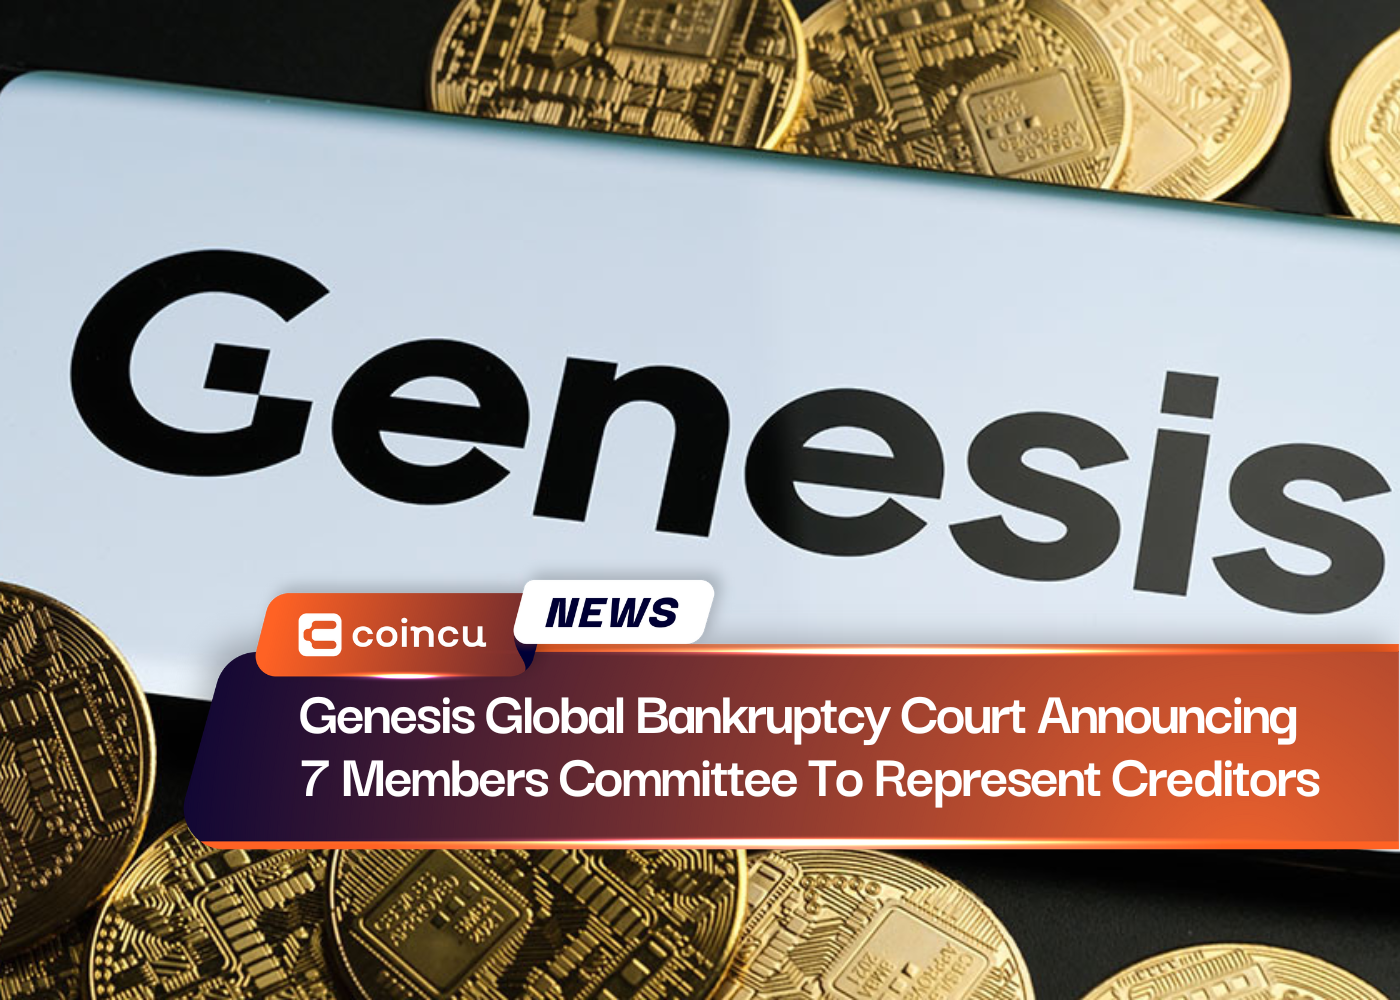 Genesis Global Bankruptcy Court Announcing 7 Members Committee To Represent Creditors